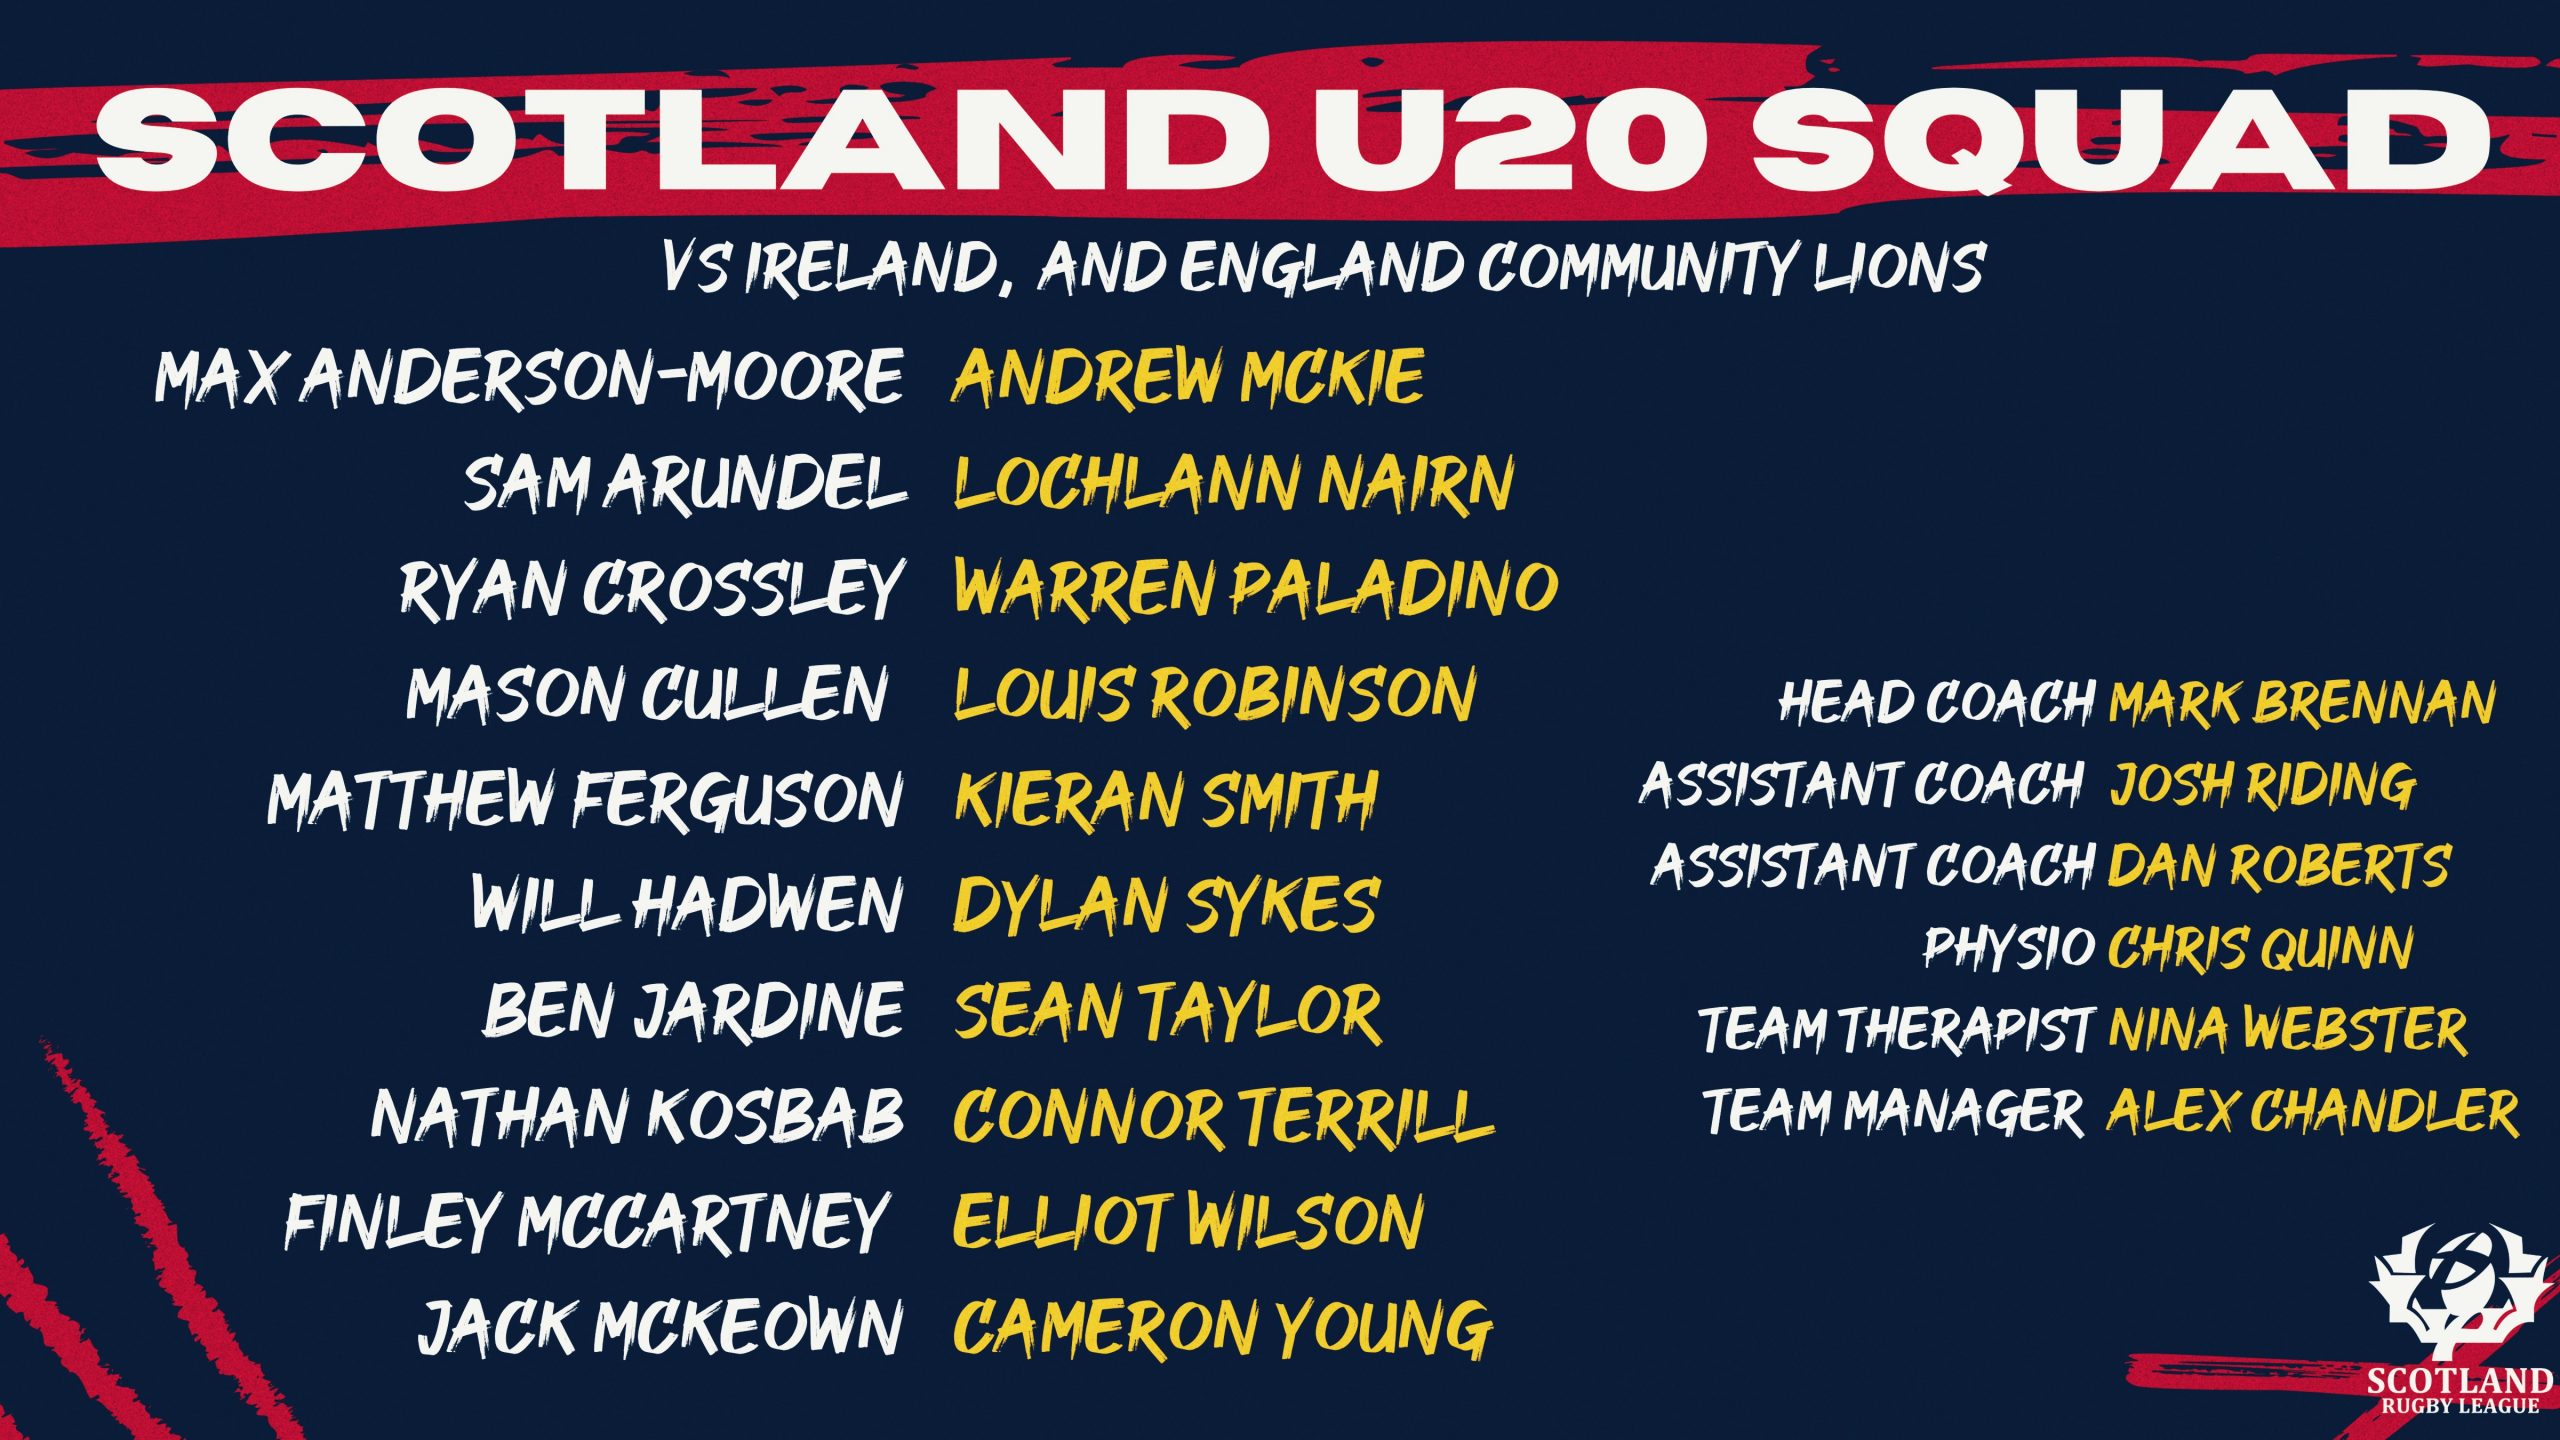 Scotland U20 Squad named Scotland Rugby League